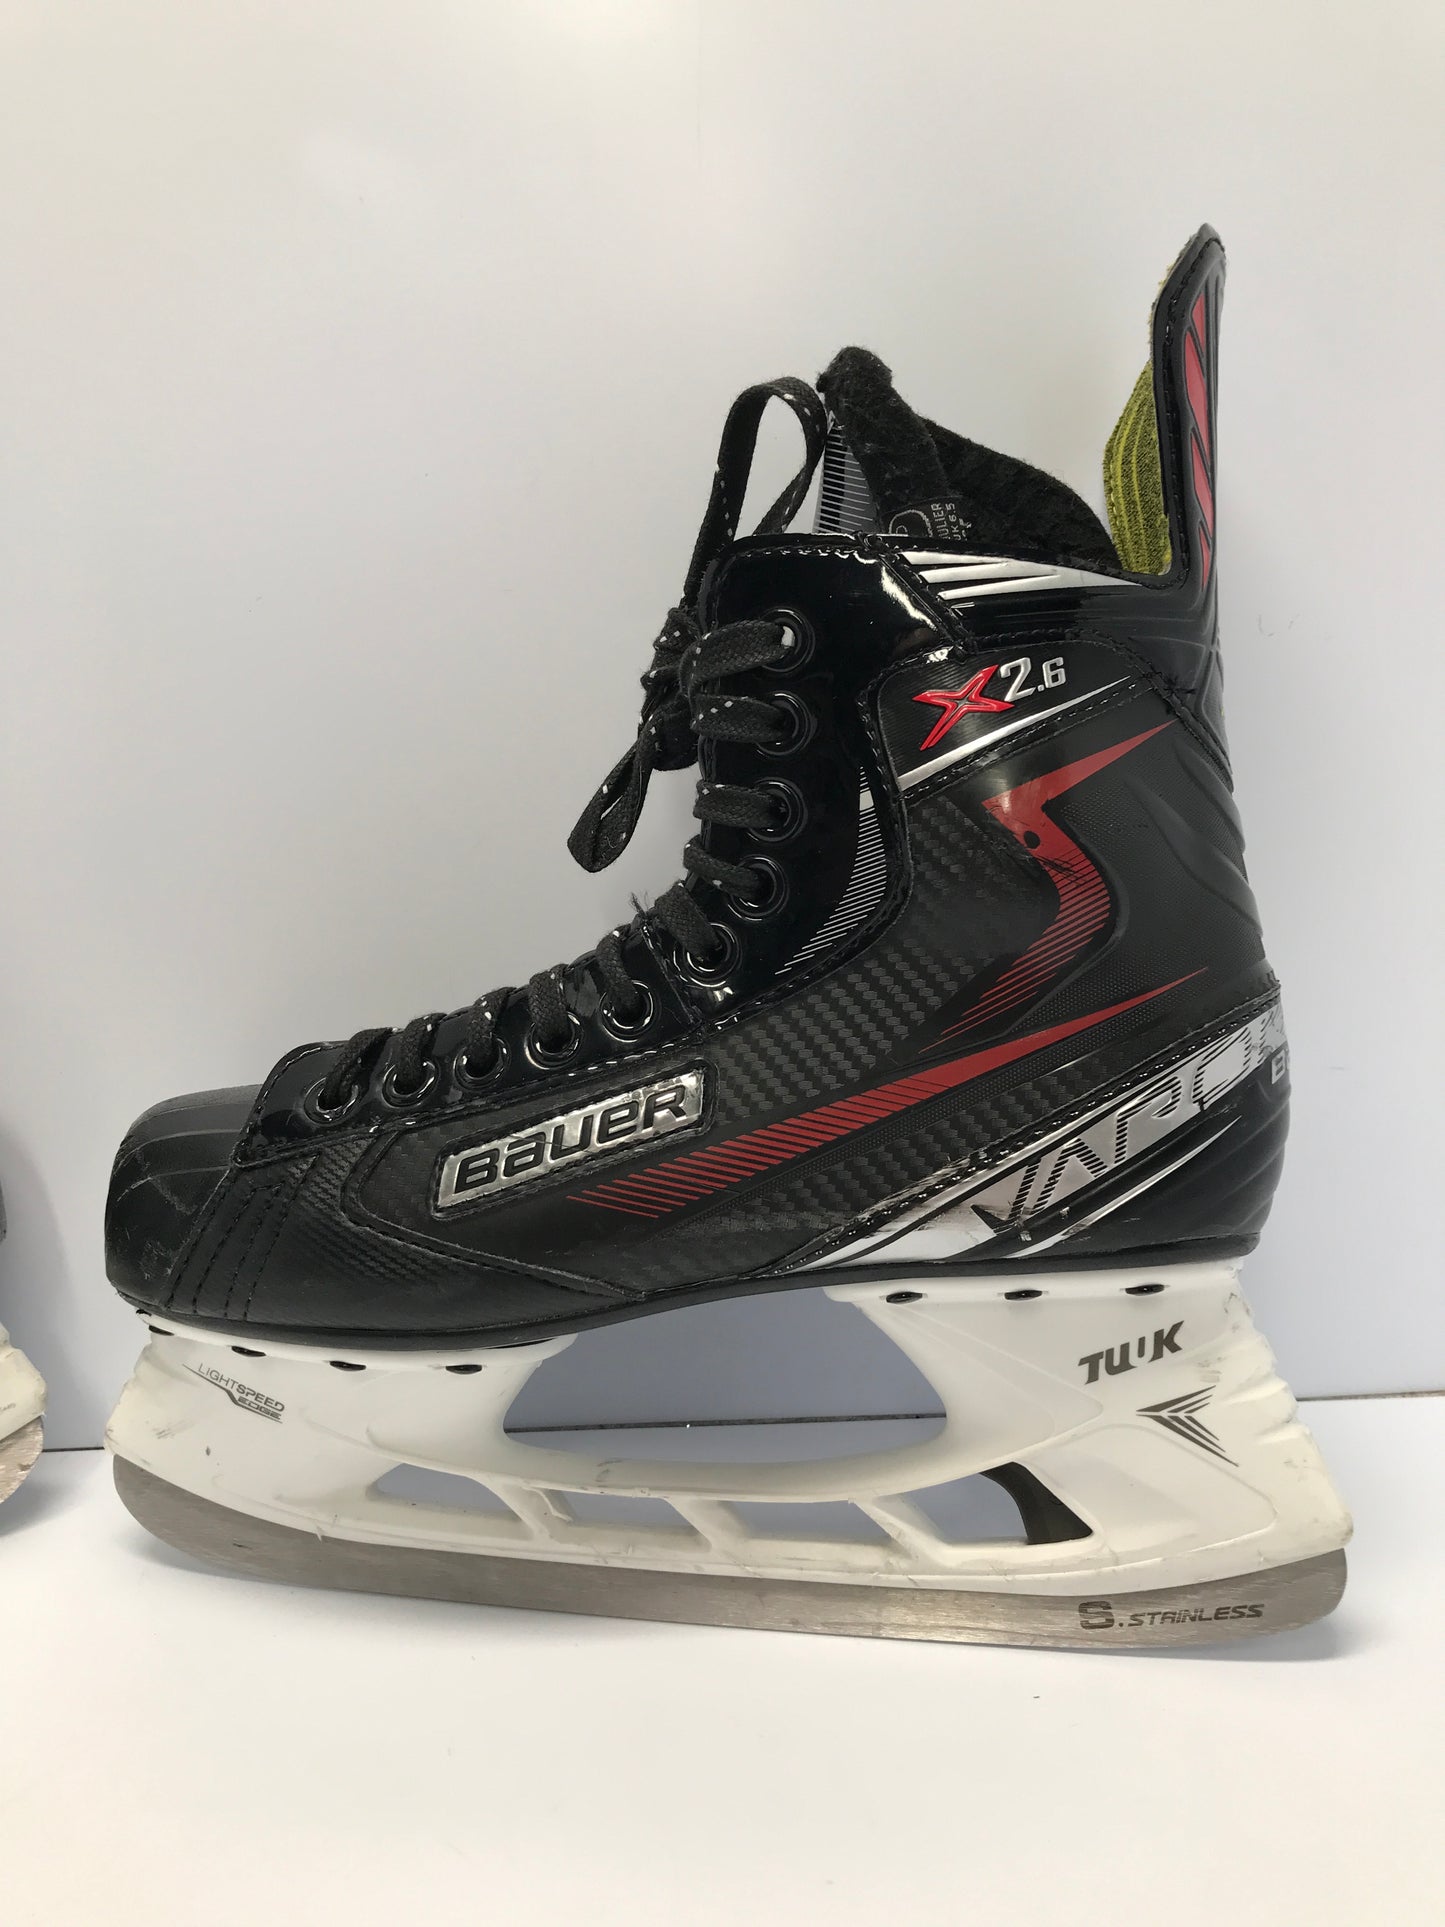 Hockey Skates Men's Size 7.5 USA Shoe Size 6 Skate Size Bauer Vapor X2.6 Excellent